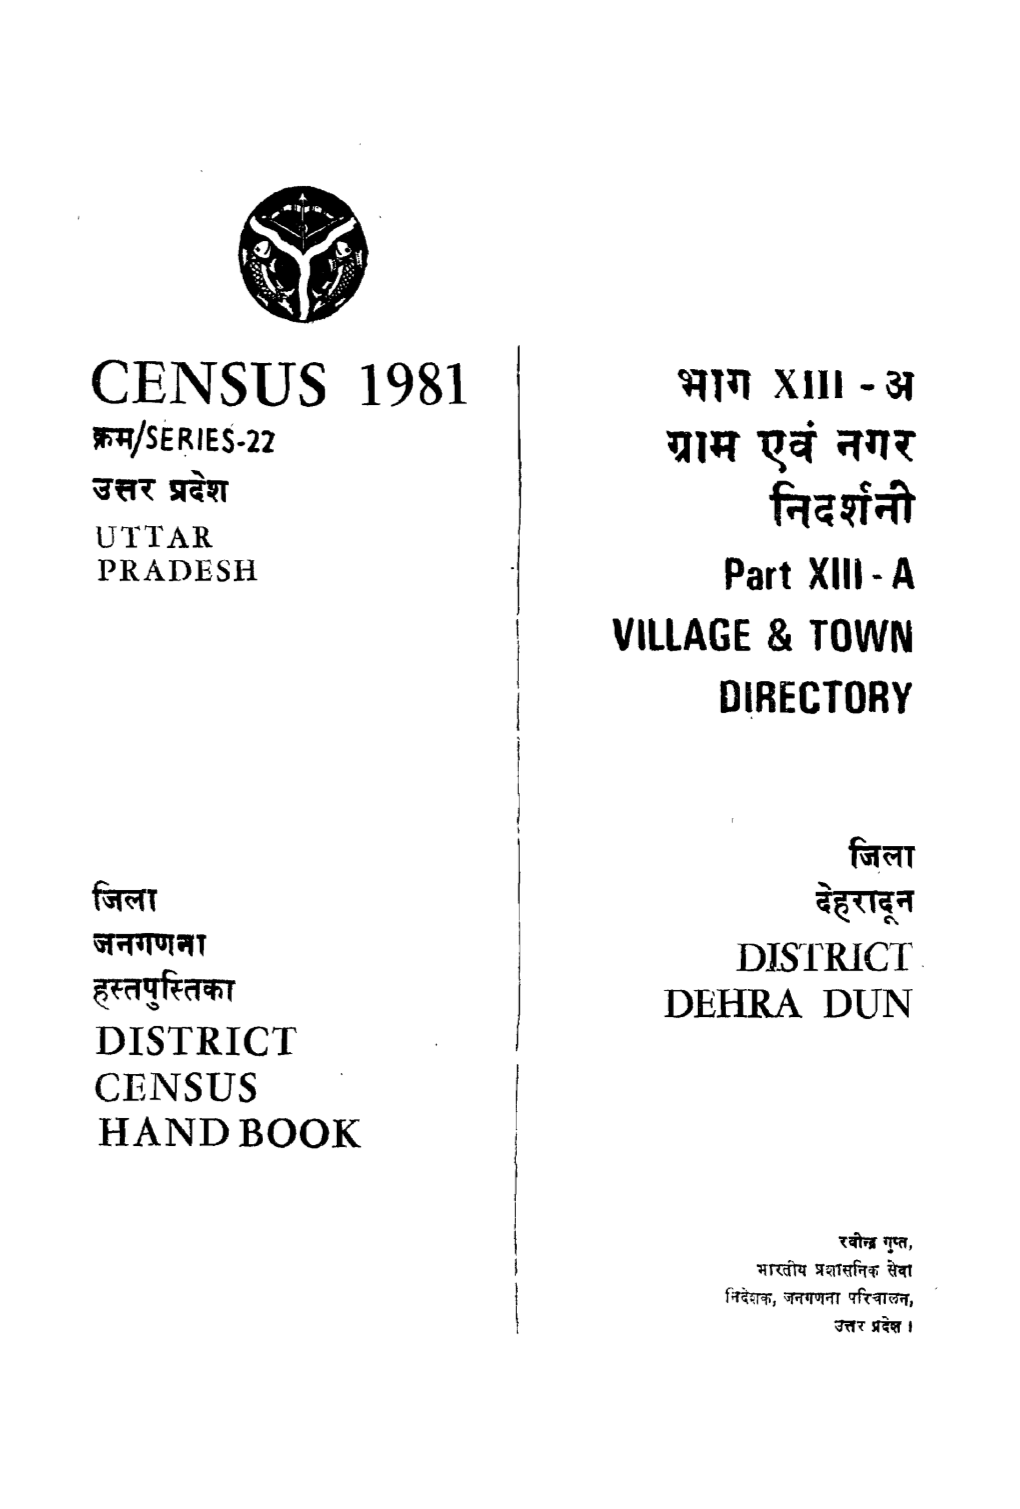 District Census Handbook, Dehra Dun, Part XIII-A, Series-22, Uttar Pradesh